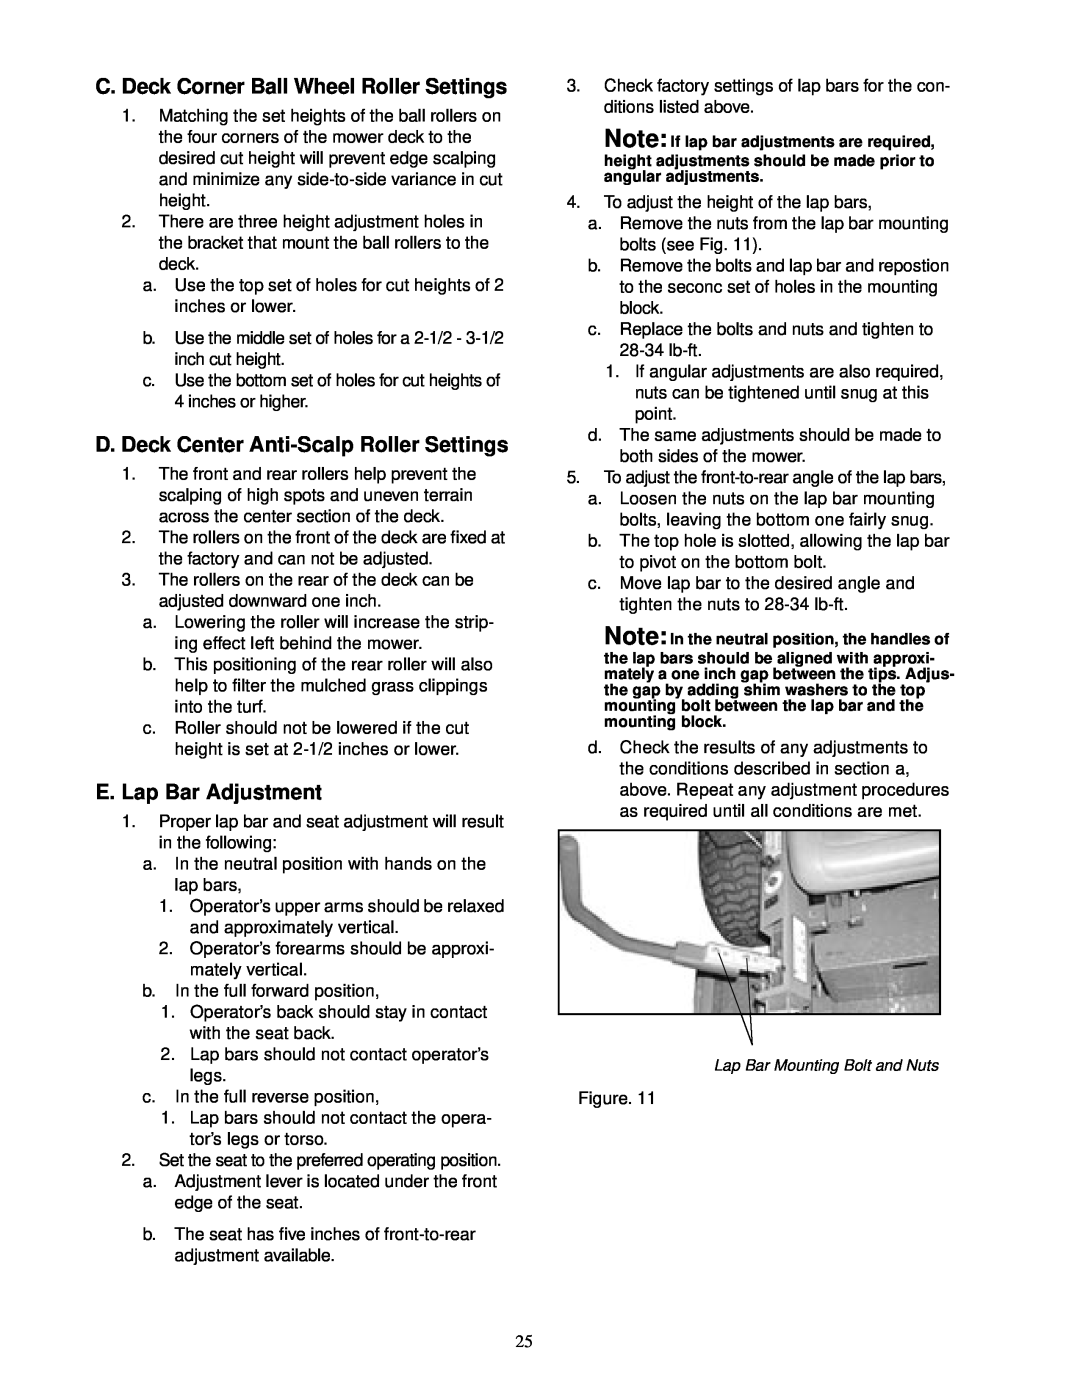 Cub Cadet 60-inch & 72-inch Fabricated Deck service manual C. Deck Corner Ball Wheel Roller Settings, E. Lap Bar Adjustment 